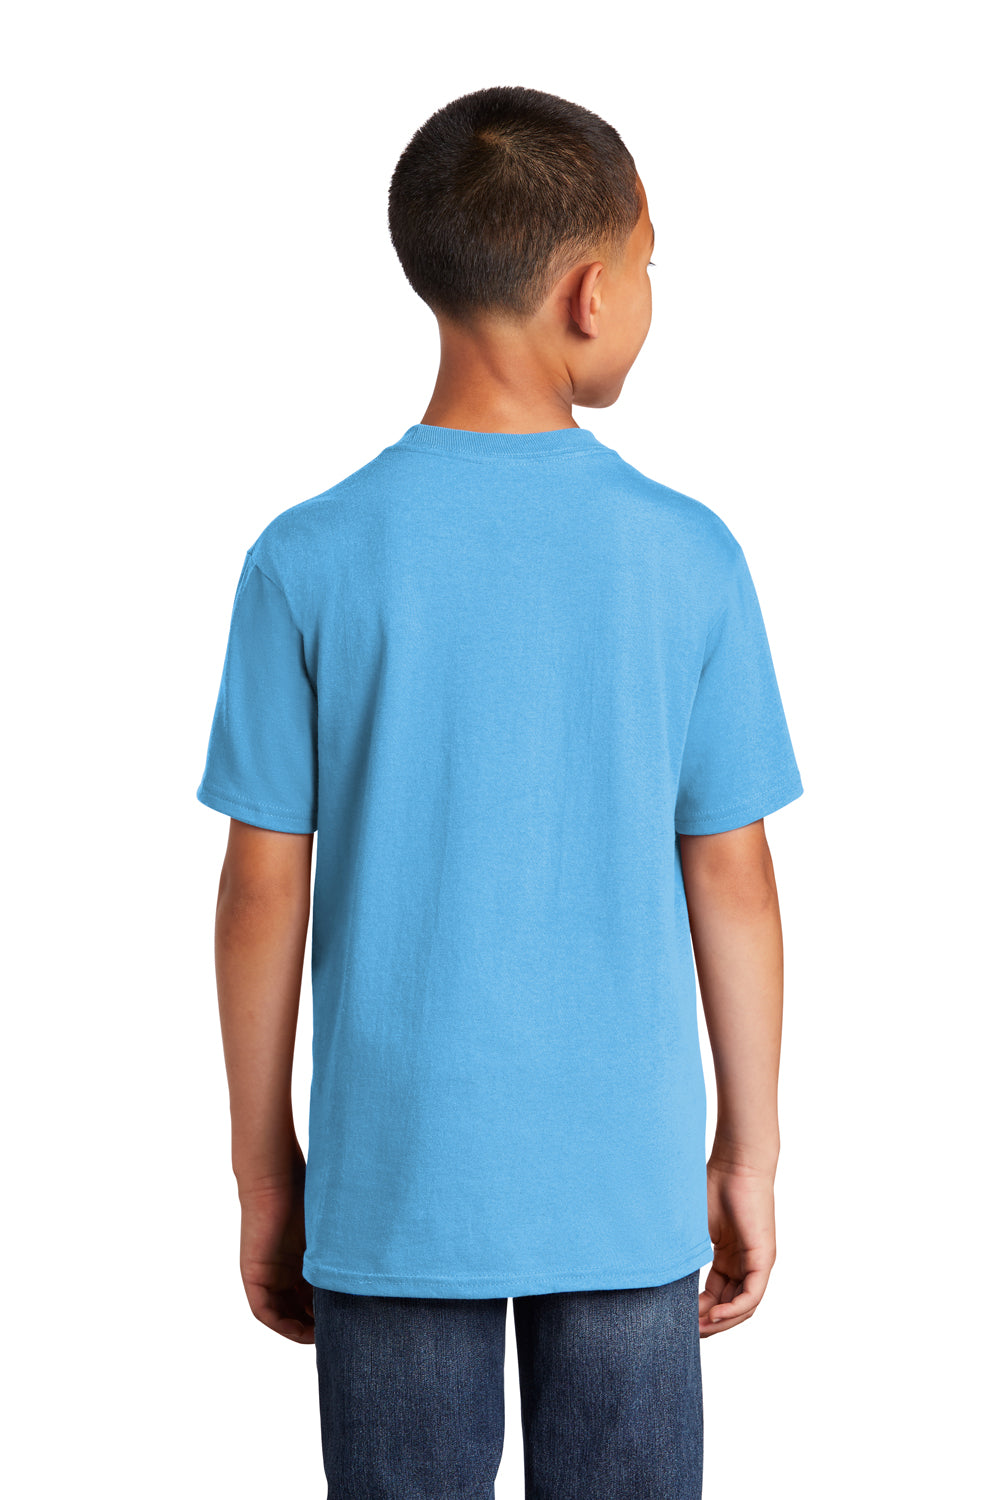 Port & Company PC54Y Youth Core Short Sleeve Crewneck T-Shirt Aqua Blue Back